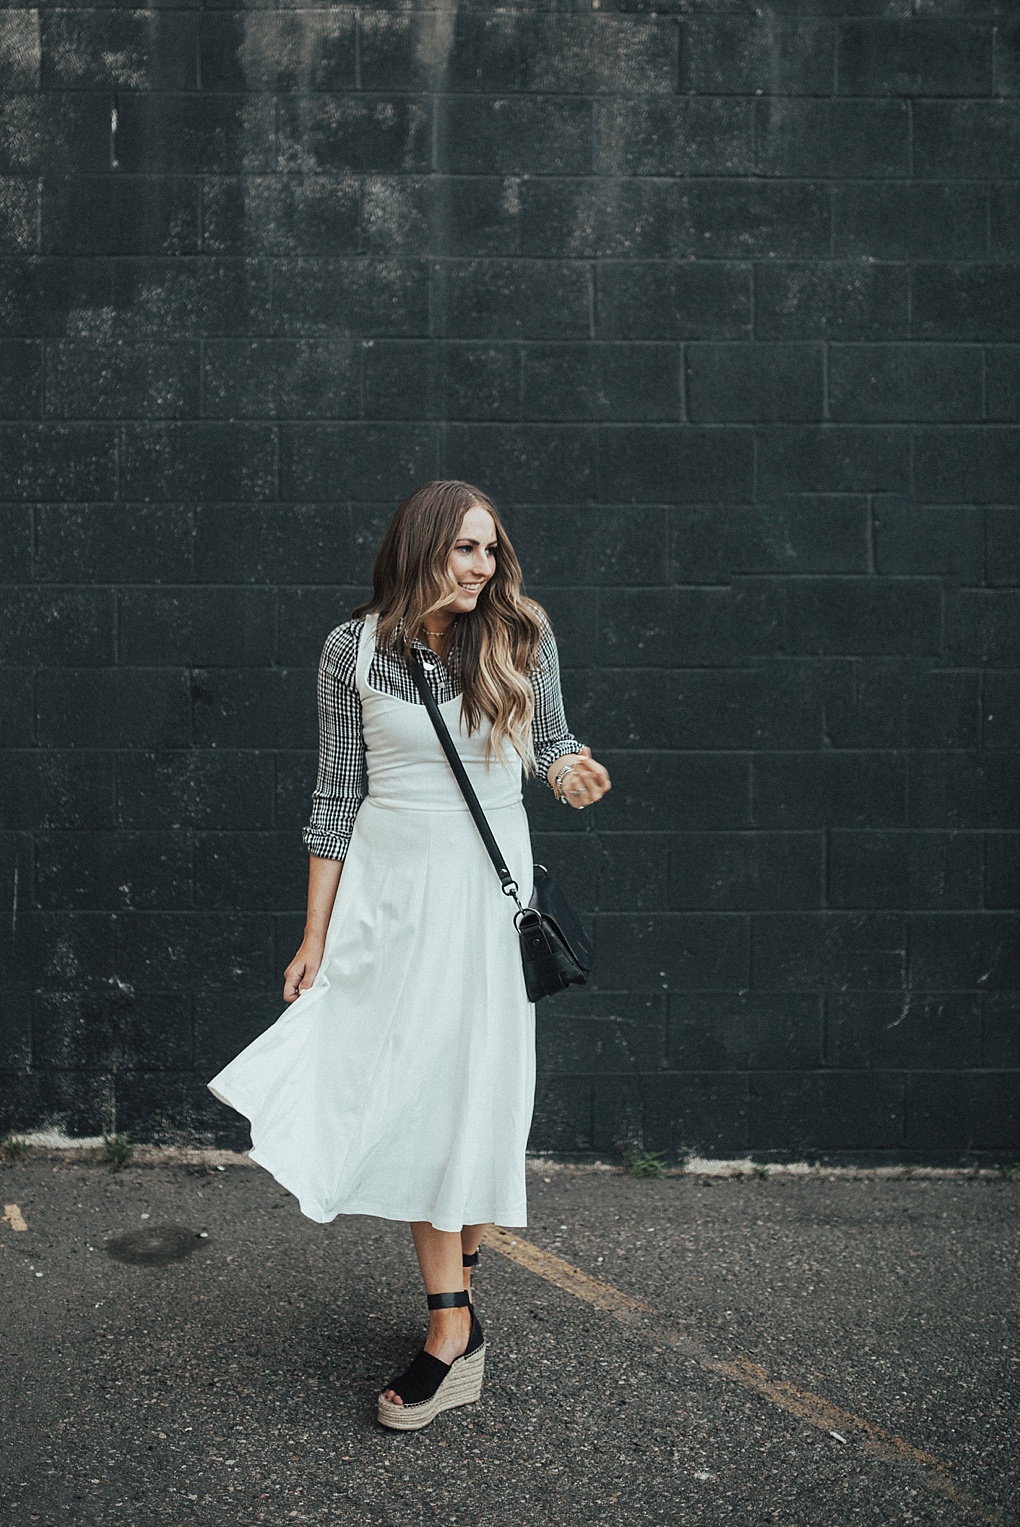 Wearing White In The Fall: White Tank Top Dress by Utah fashion blogger Dani Marie